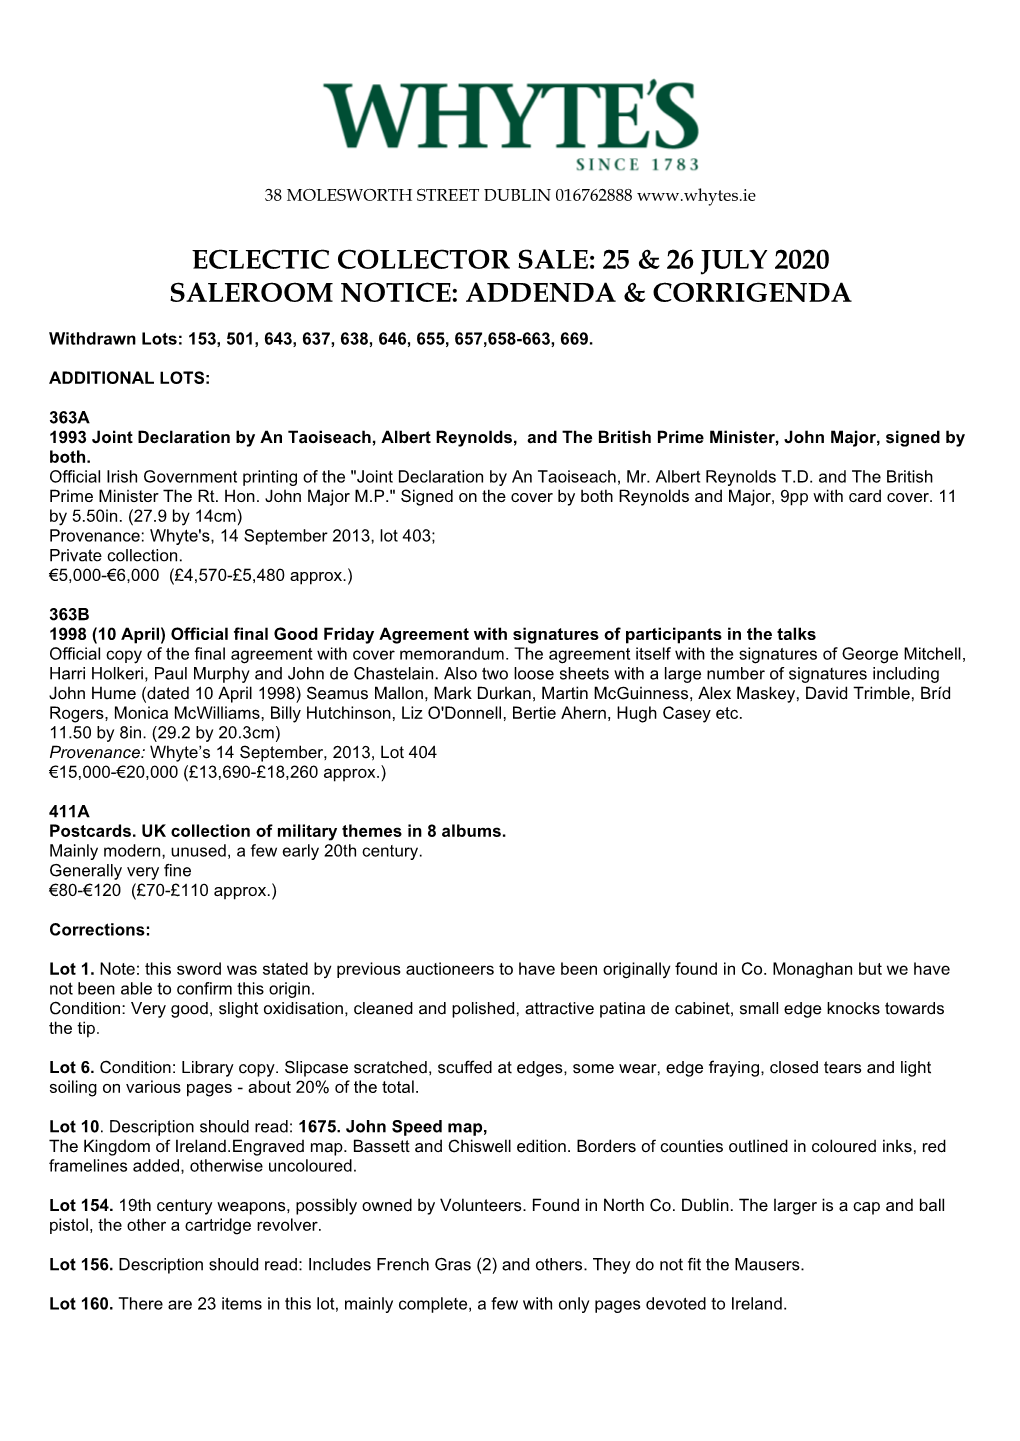 Eclectic Collector Sale: 25 & 26 July 2020 Saleroom Notice